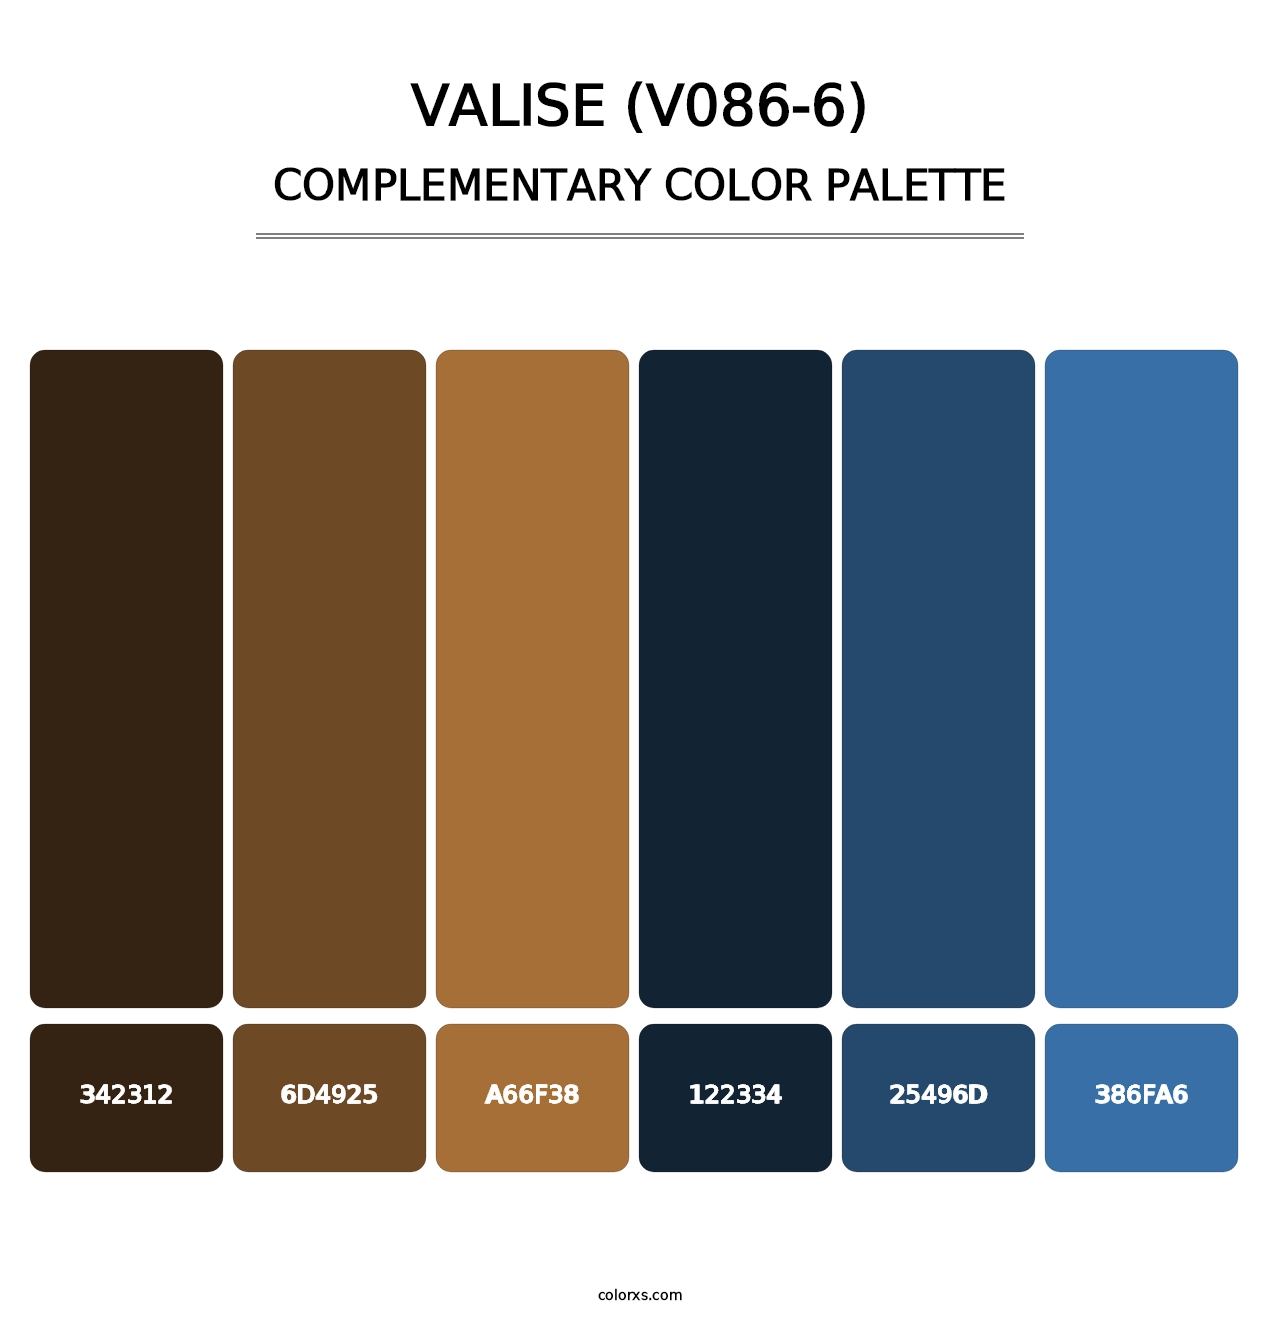 Valise (V086-6) - Complementary Color Palette